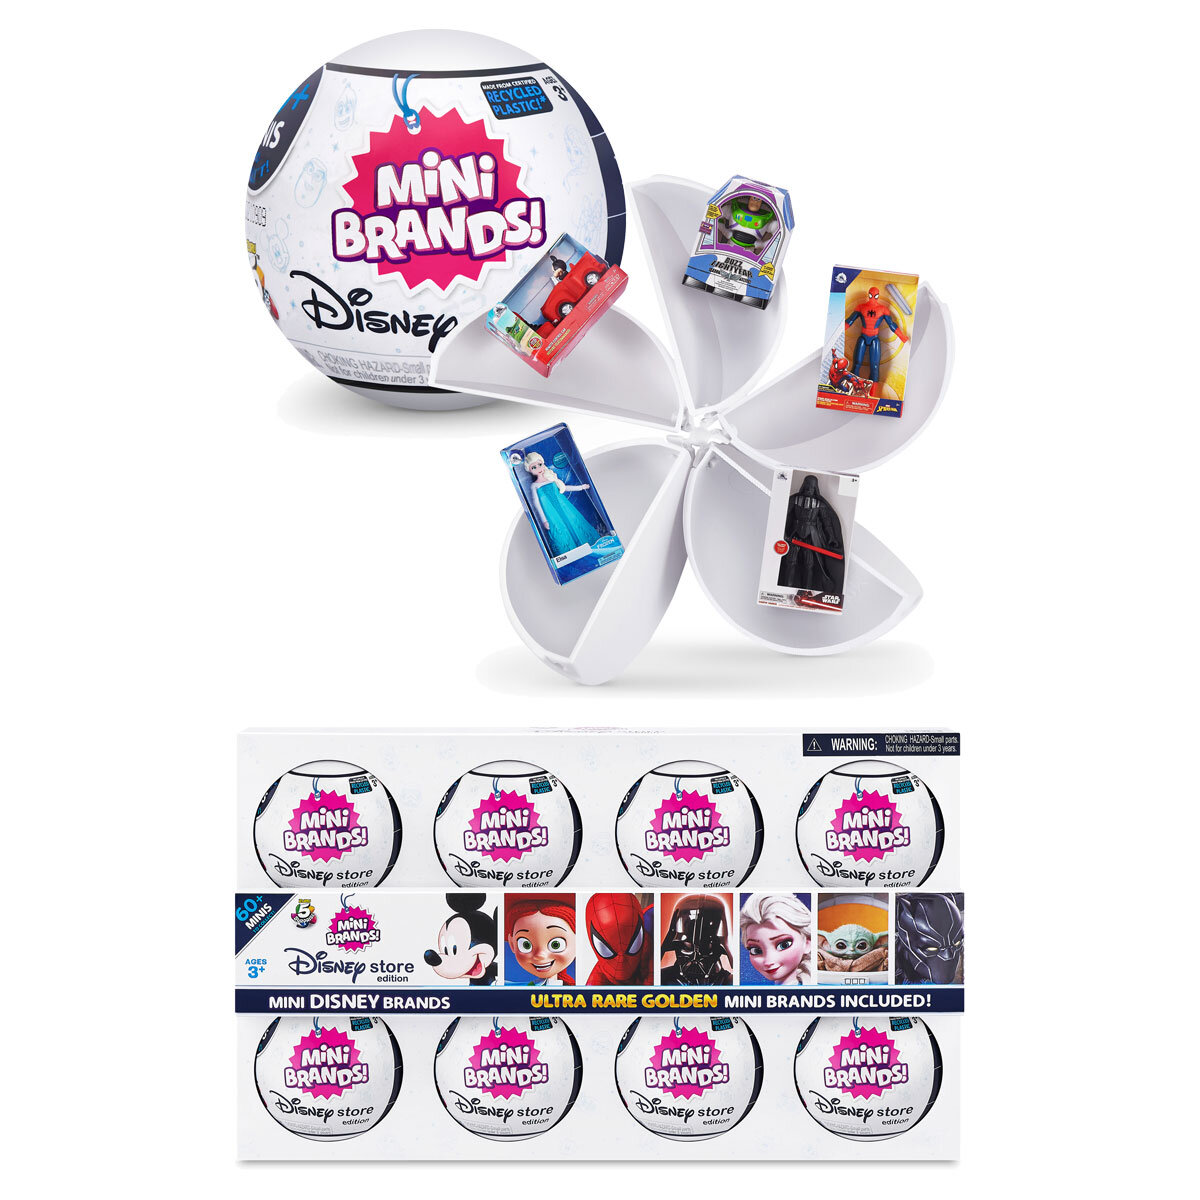 Buy Disney Mini Brands 8 Pack Combined Box & Item Image at Costco.co.uk